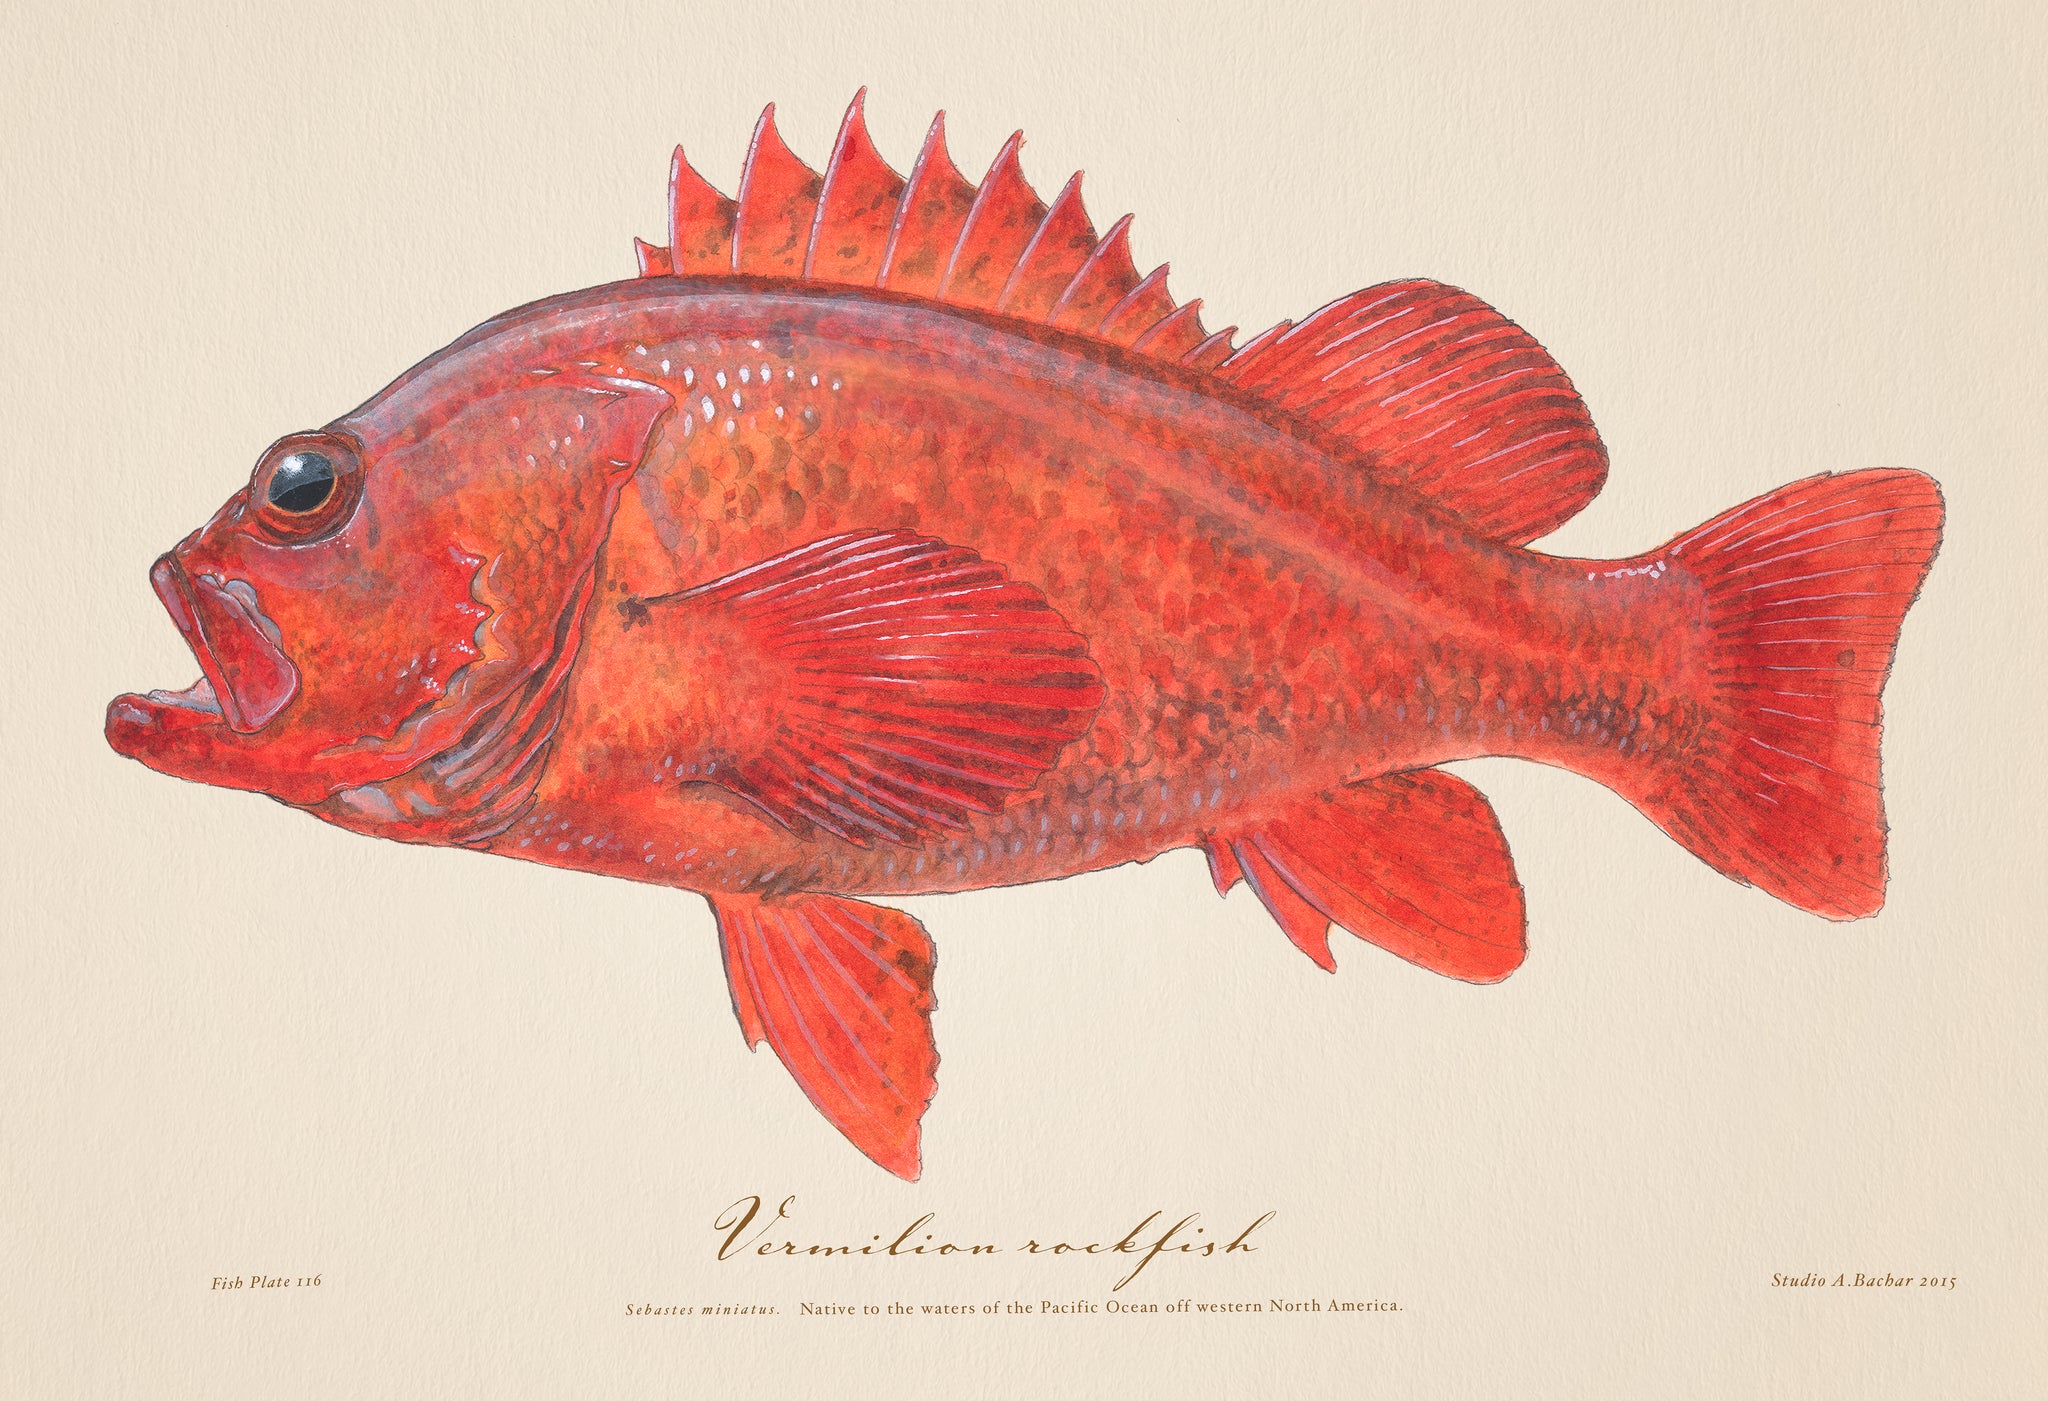 Vermilion Rockfish Illustration 116